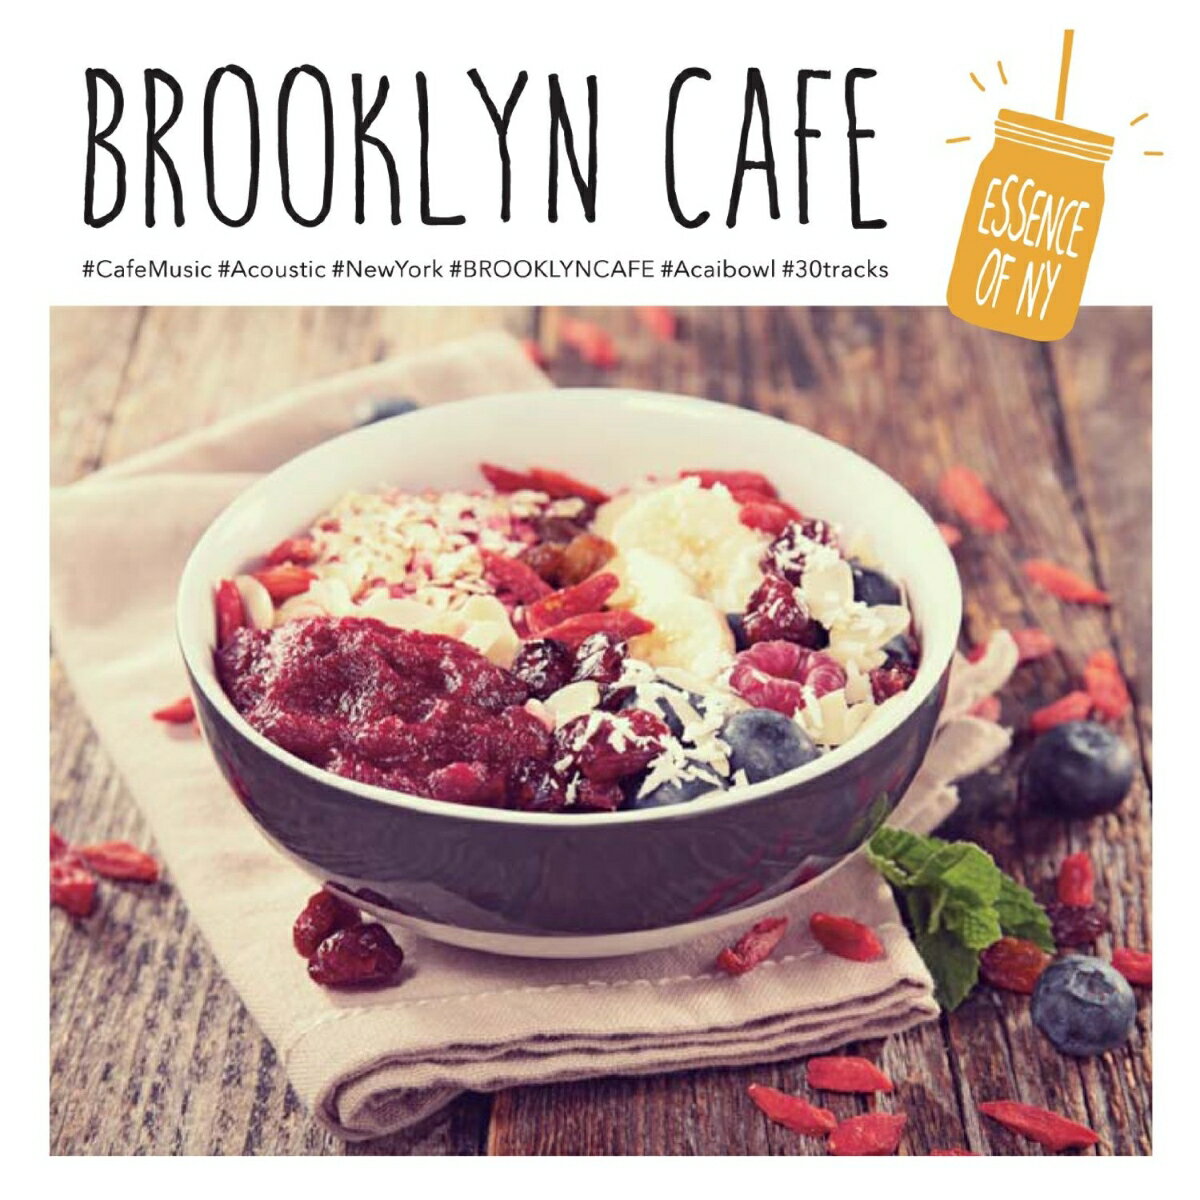 BROOKLYN CAFE -ESSENCE OF NY-